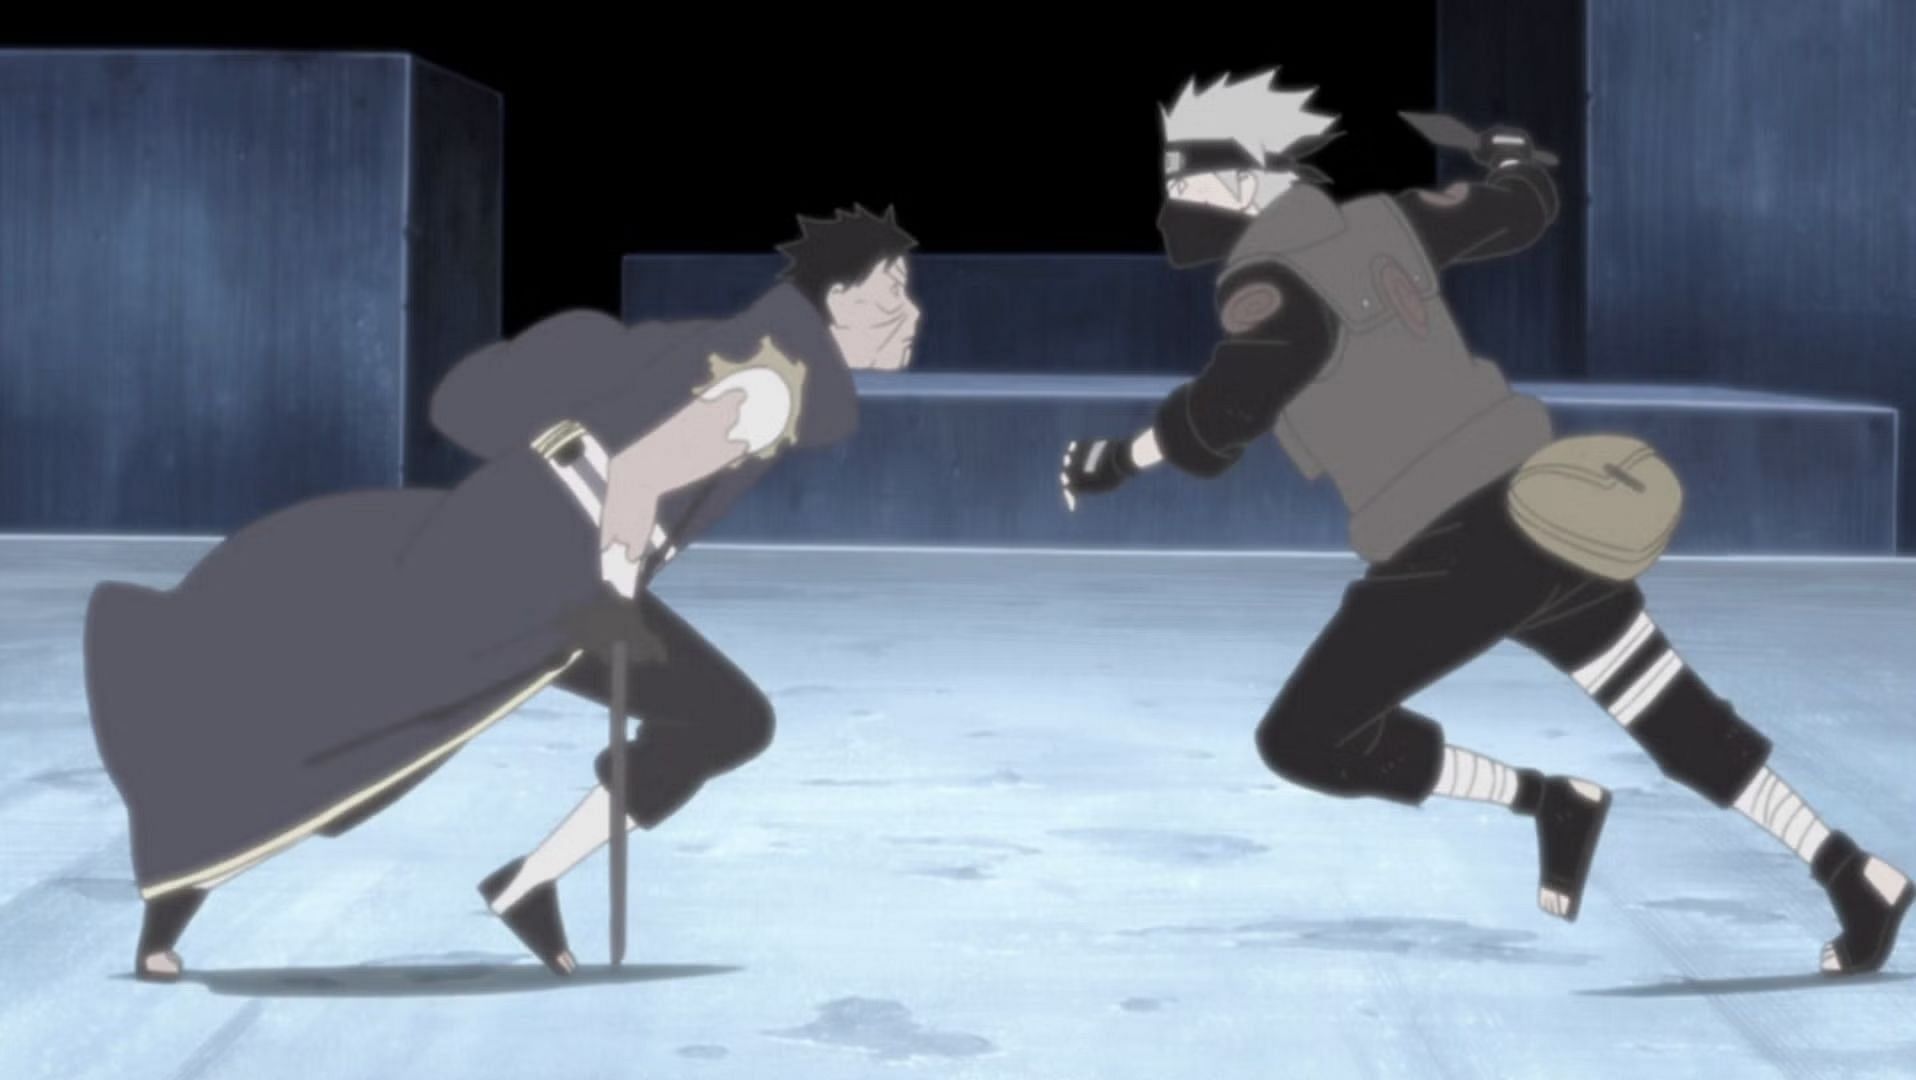 Kakashi vs Obito as seen in the anime (image via Pierrot)